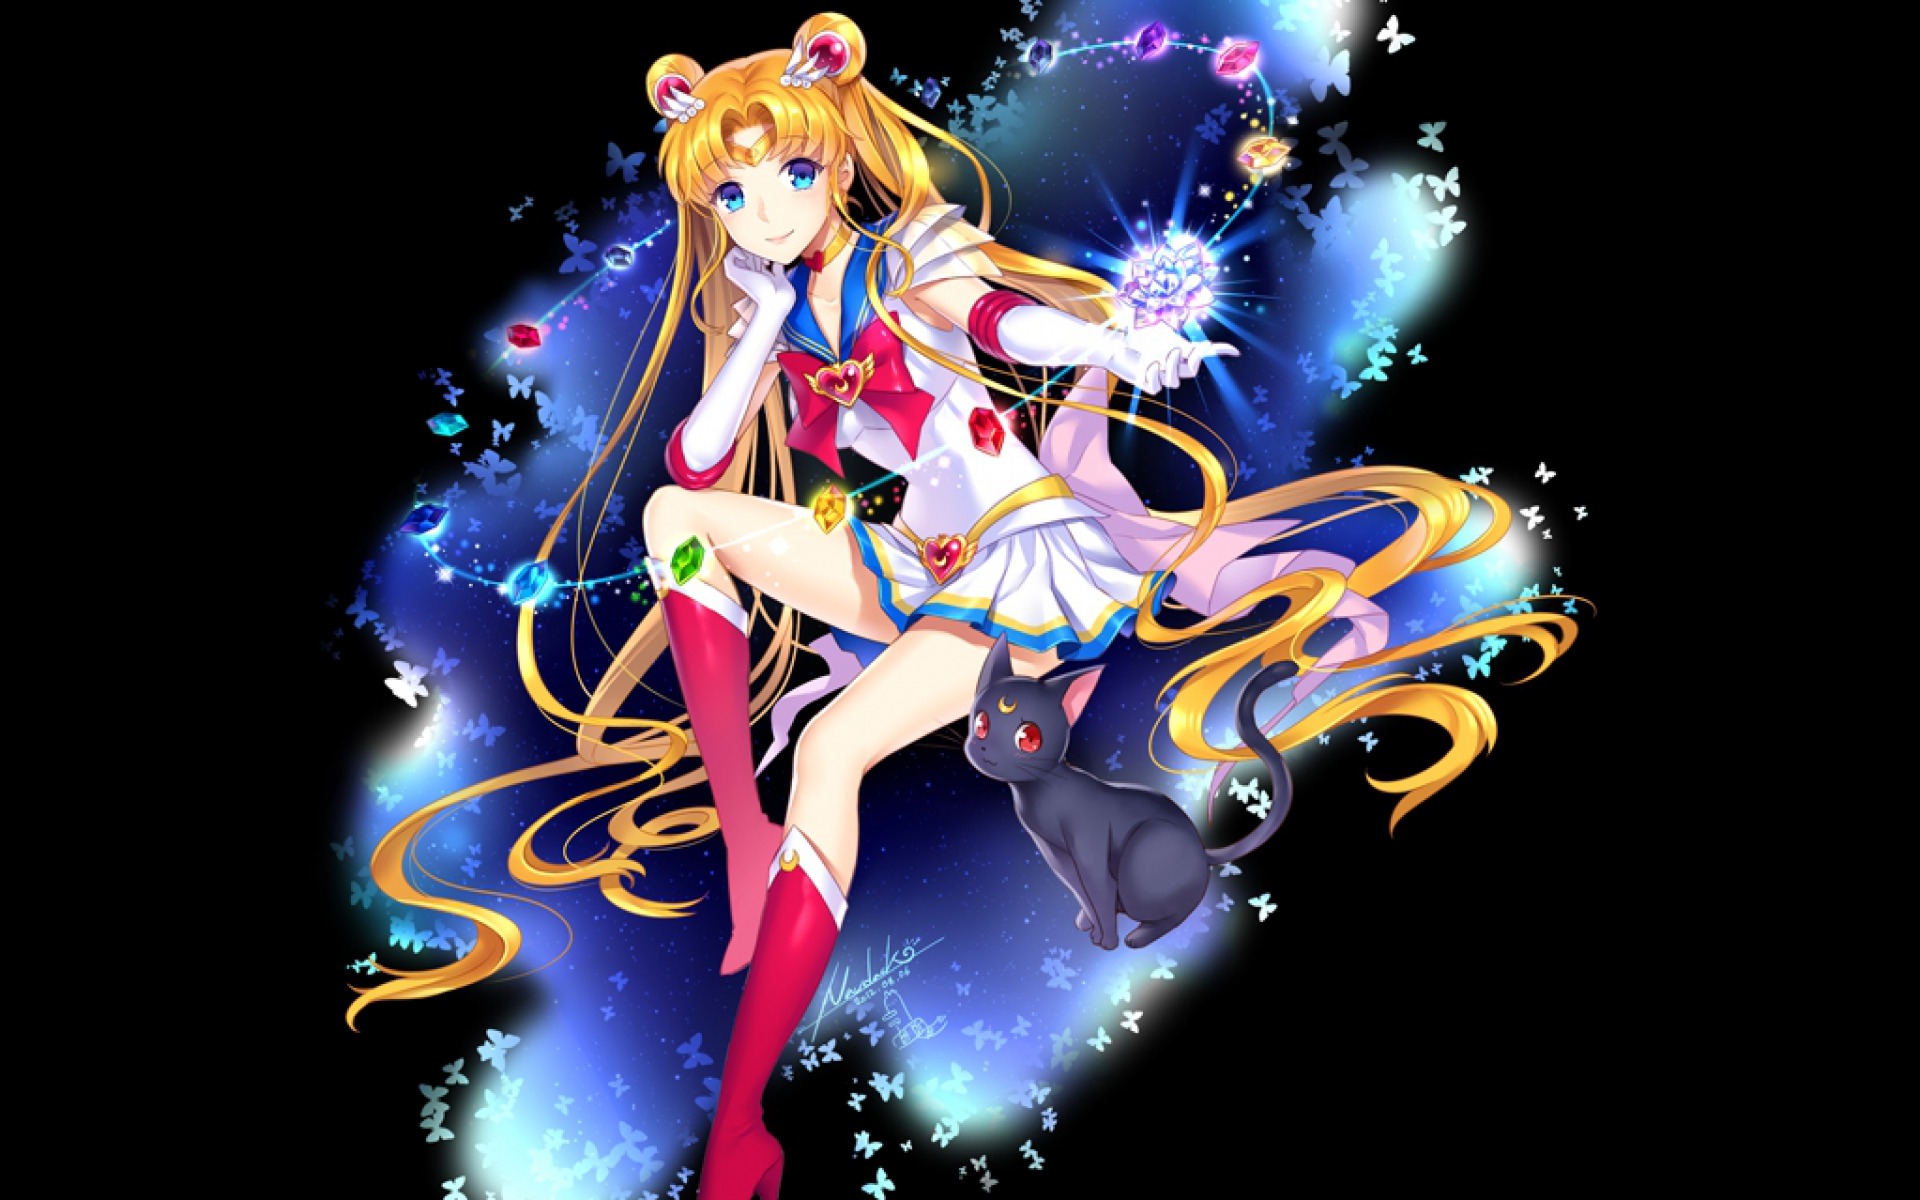 Sailor Moon 24 wallpapers | Sailor Moon 24 stock photos